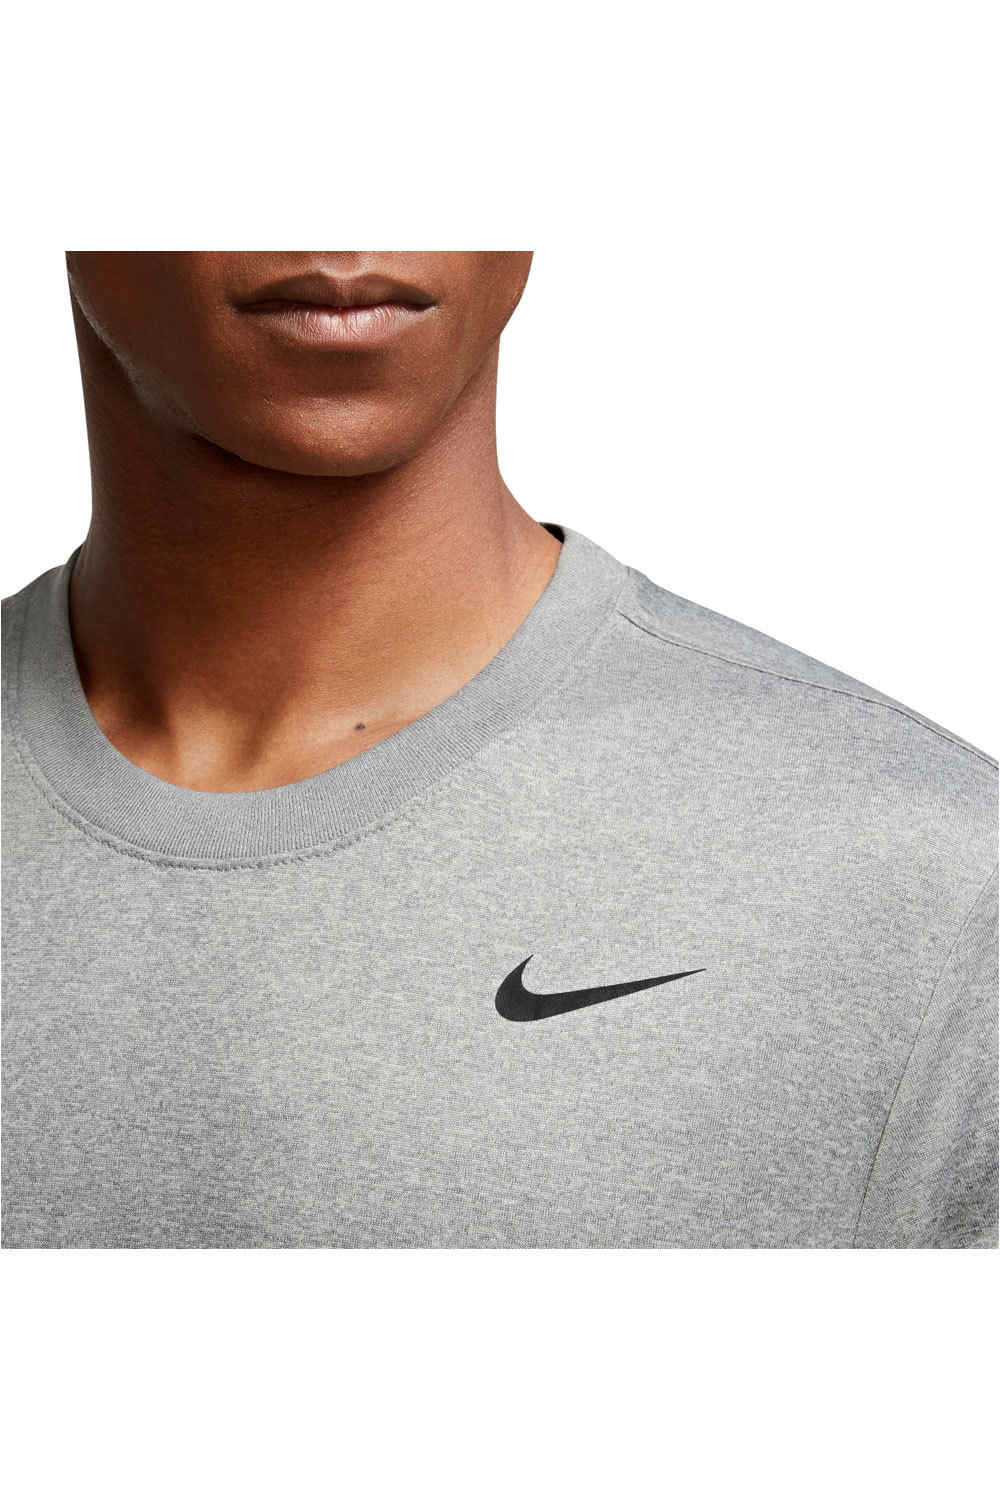 Nike camiseta fitness hombre M NK DF TEE RLGD RESET vista detalle